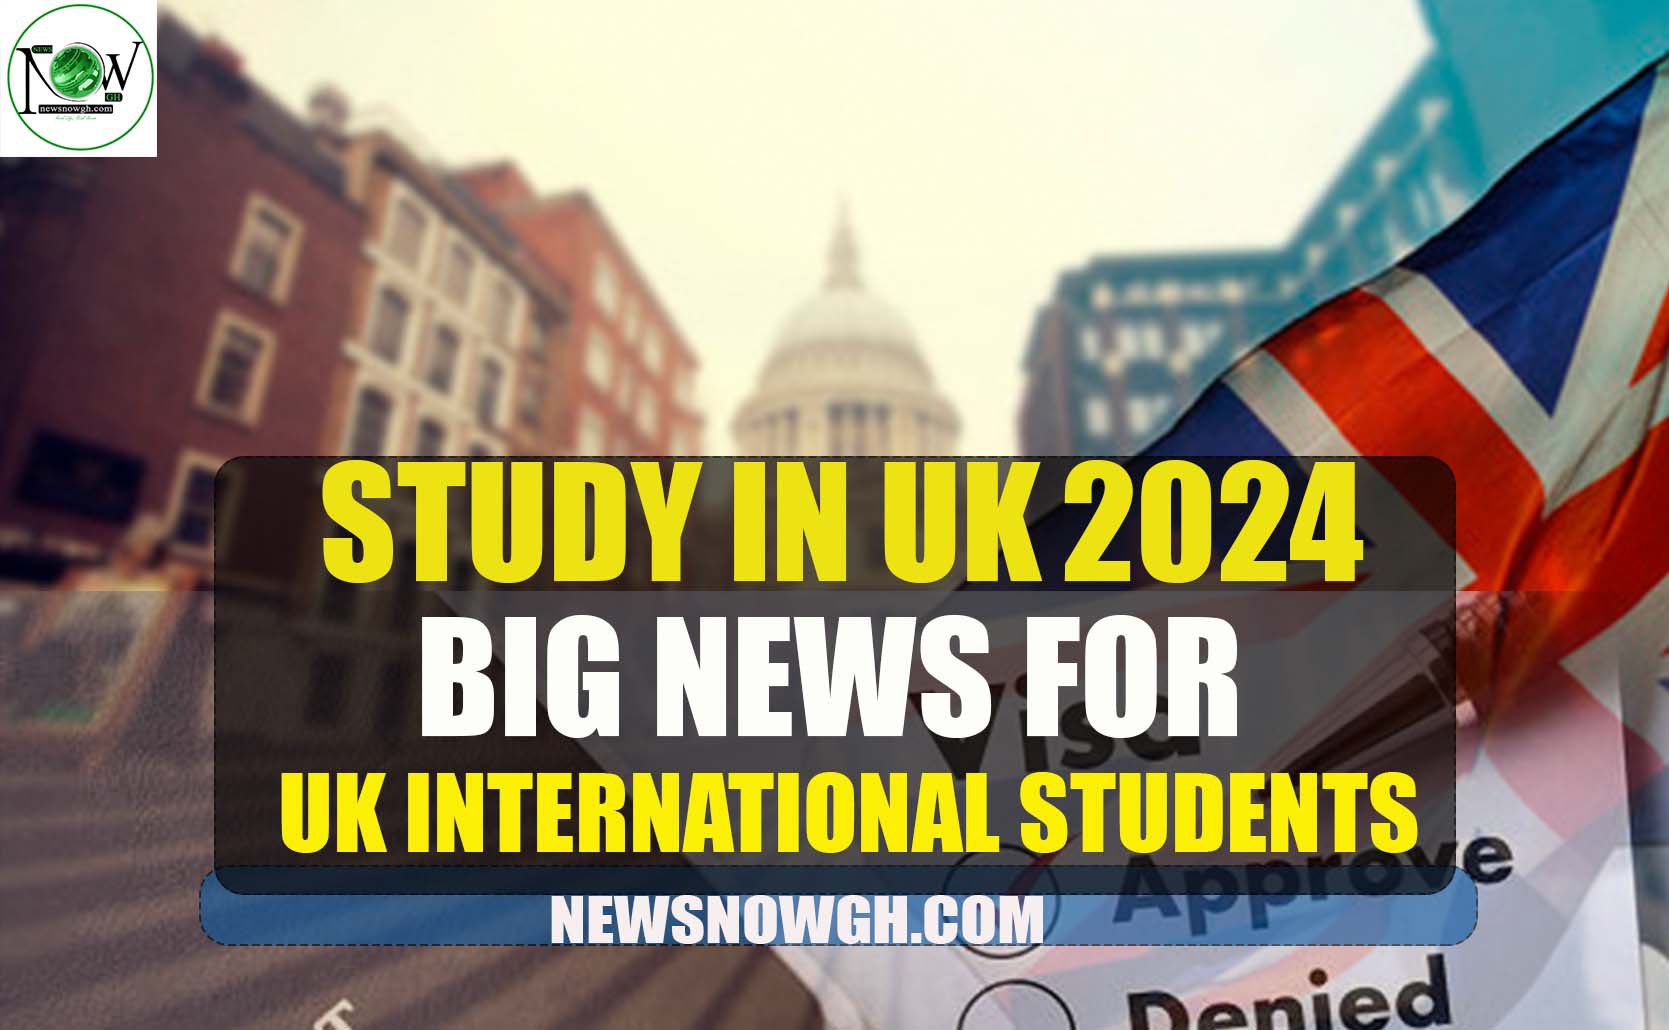 Big News for UK International Students ~ Study in UK 2024